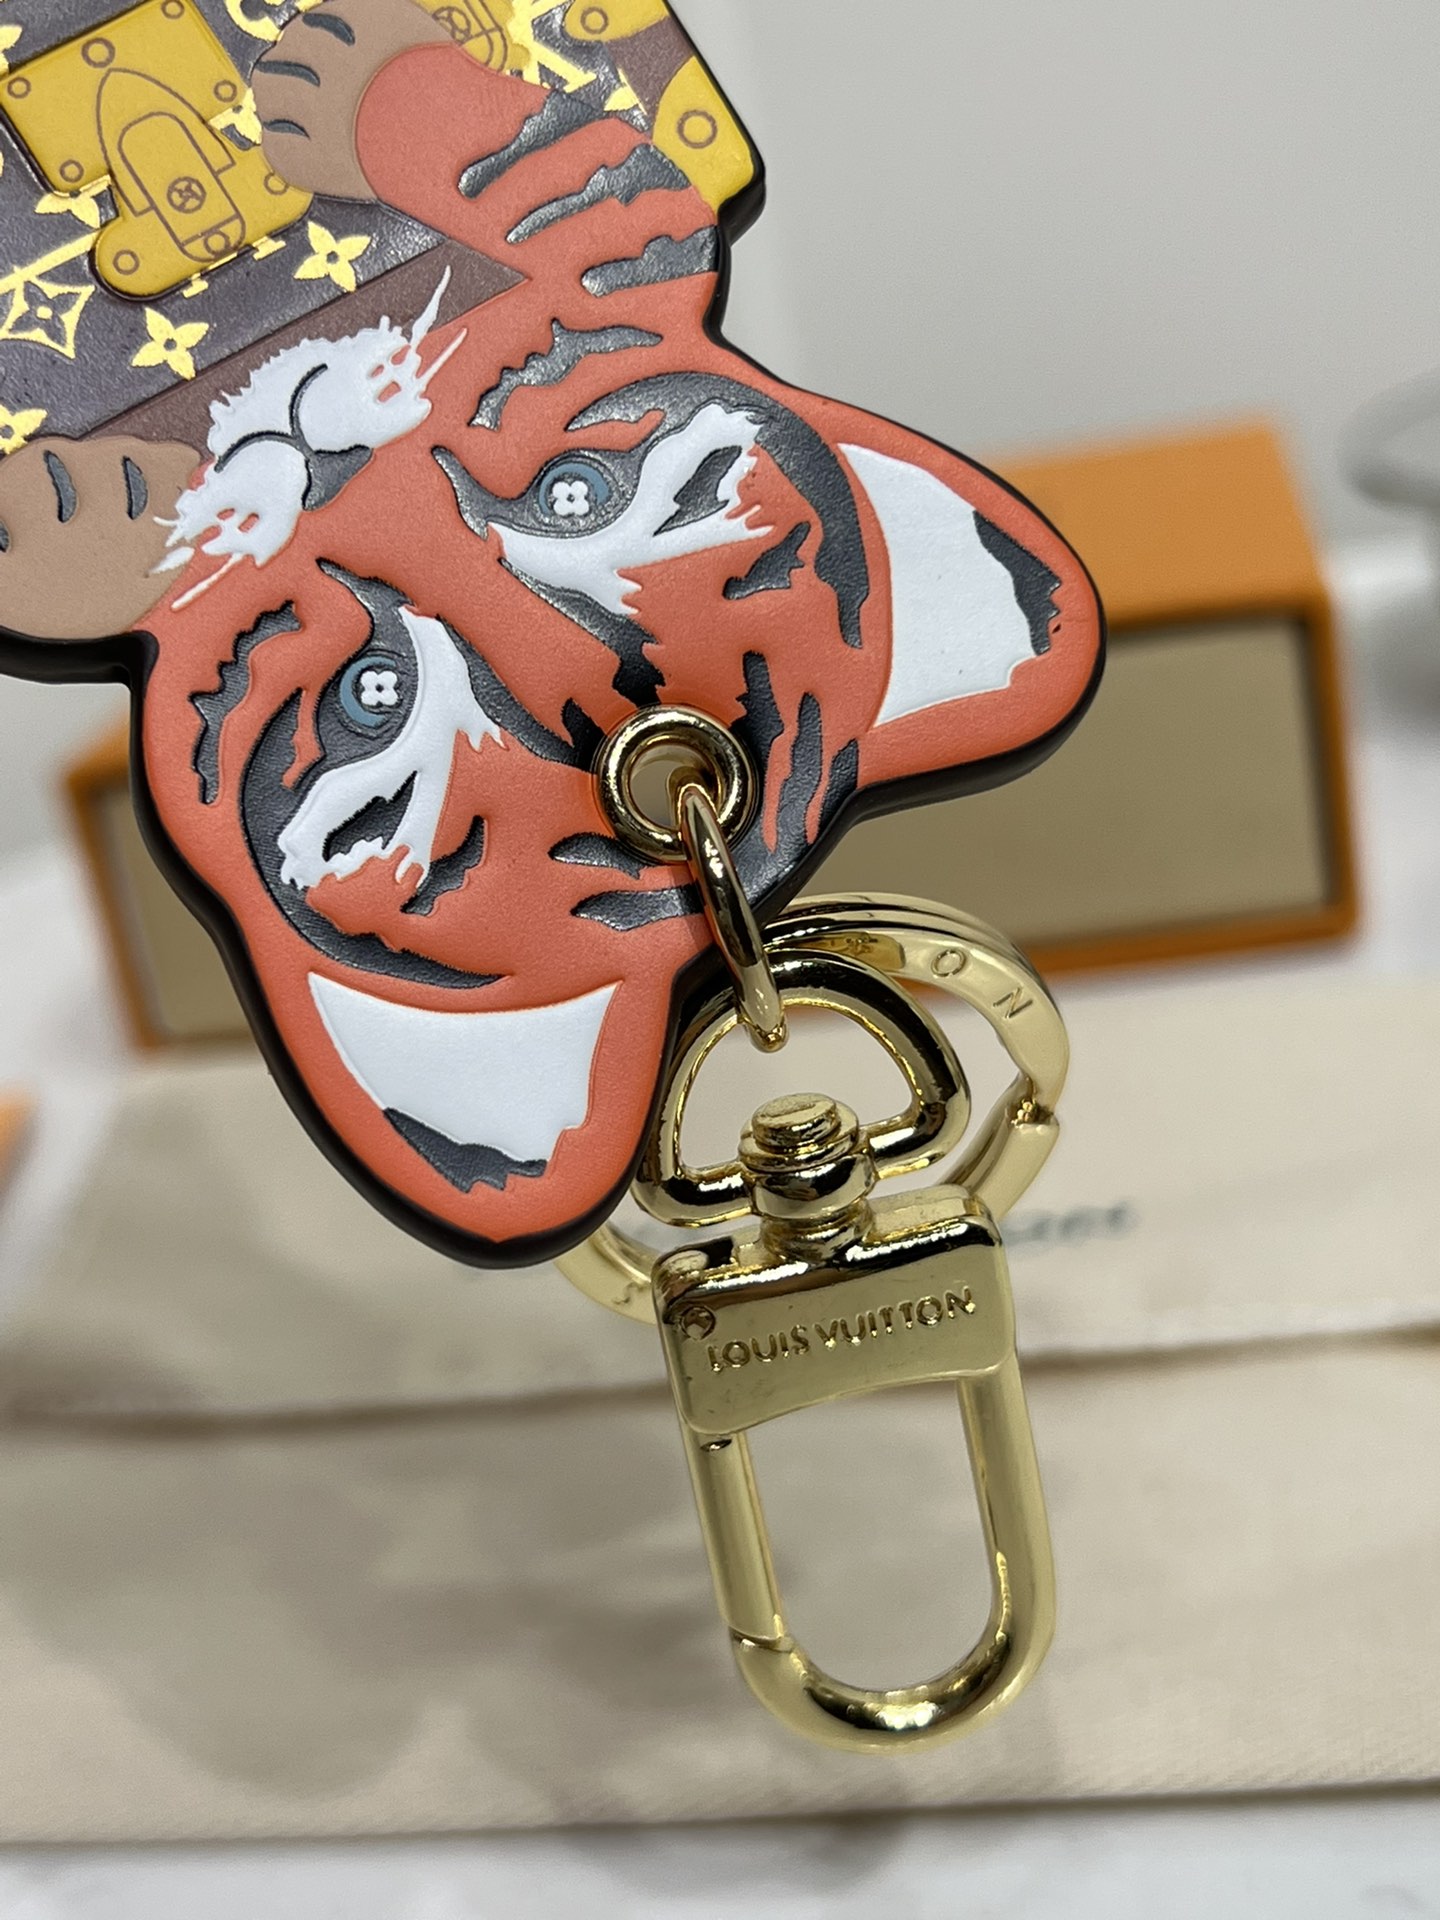 Replica Louis Vuitton M00557 LV Precious Tiger bag charm and key